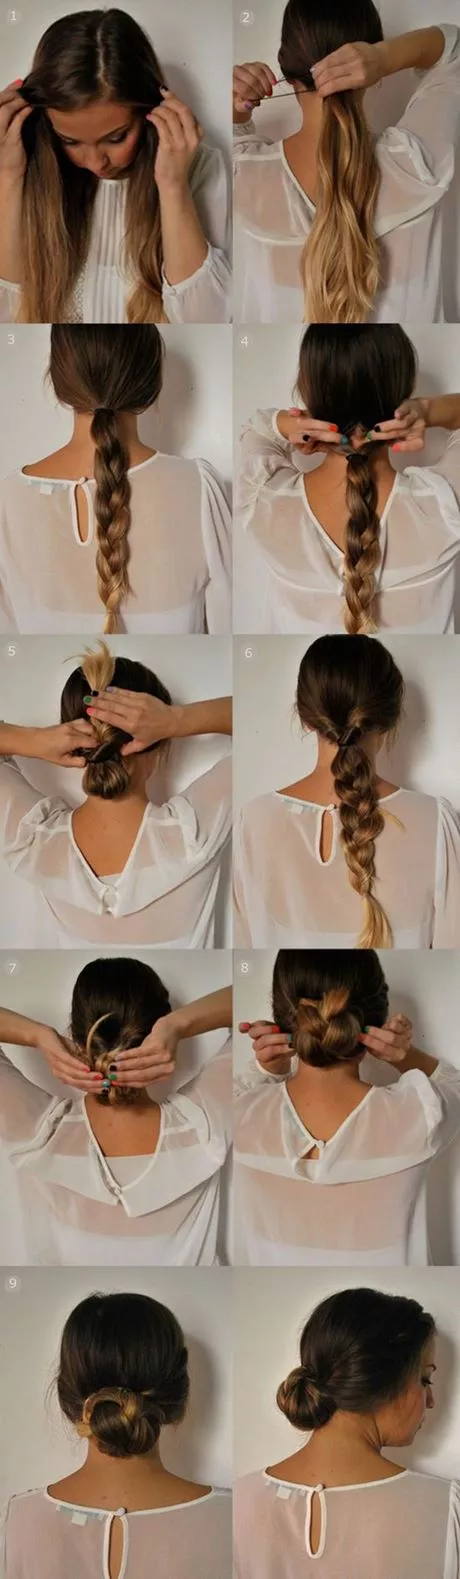 Simple hairstyles for ladies simple-hairstyles-for-ladies-41_12-5-5